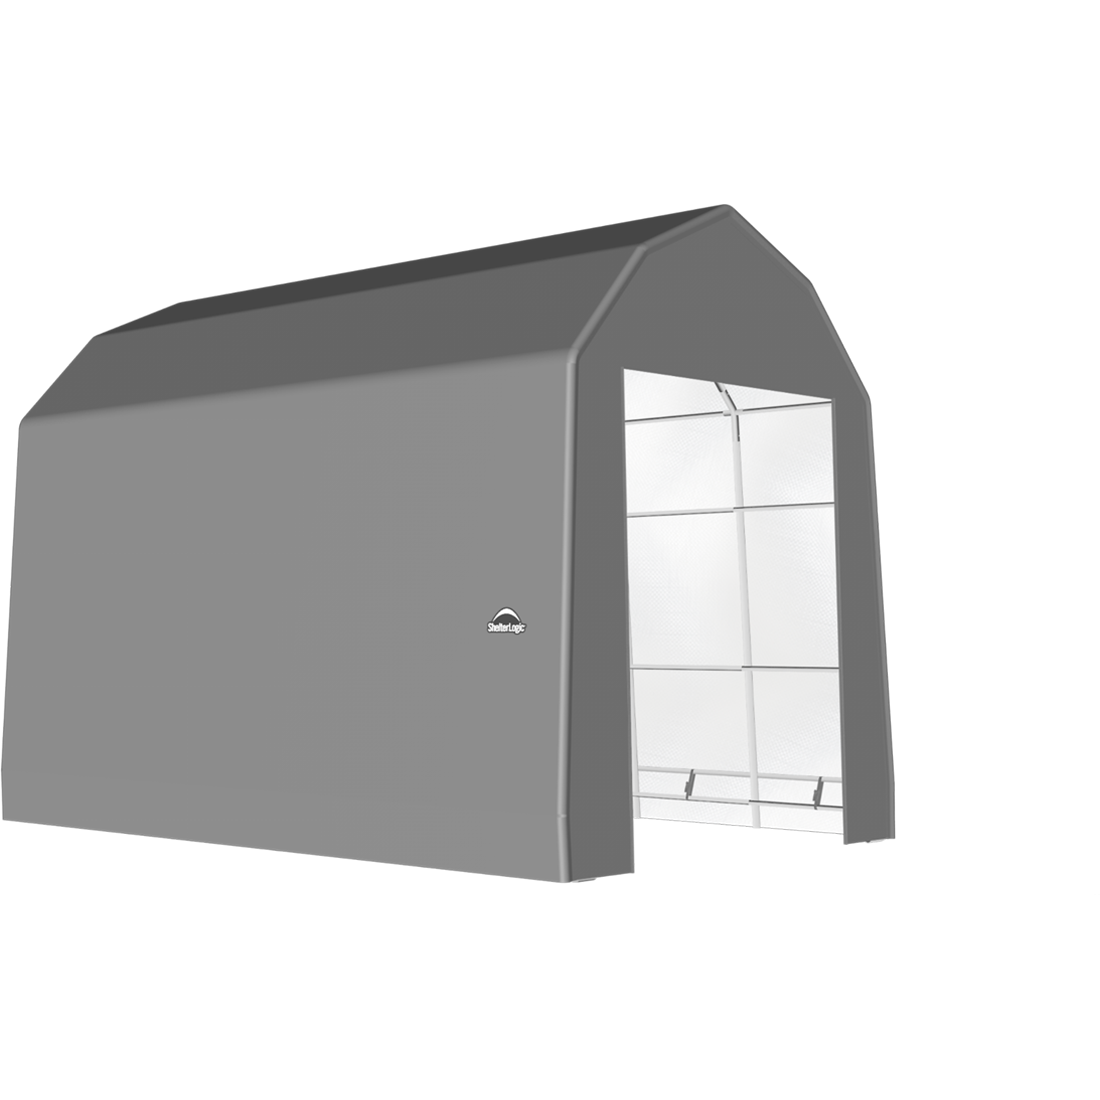 ShelterTech SP Series Barn Shelter, 15 ft. x 24 ft. x 17 ft. Heavy Duty PVC 14.5 oz. Gray